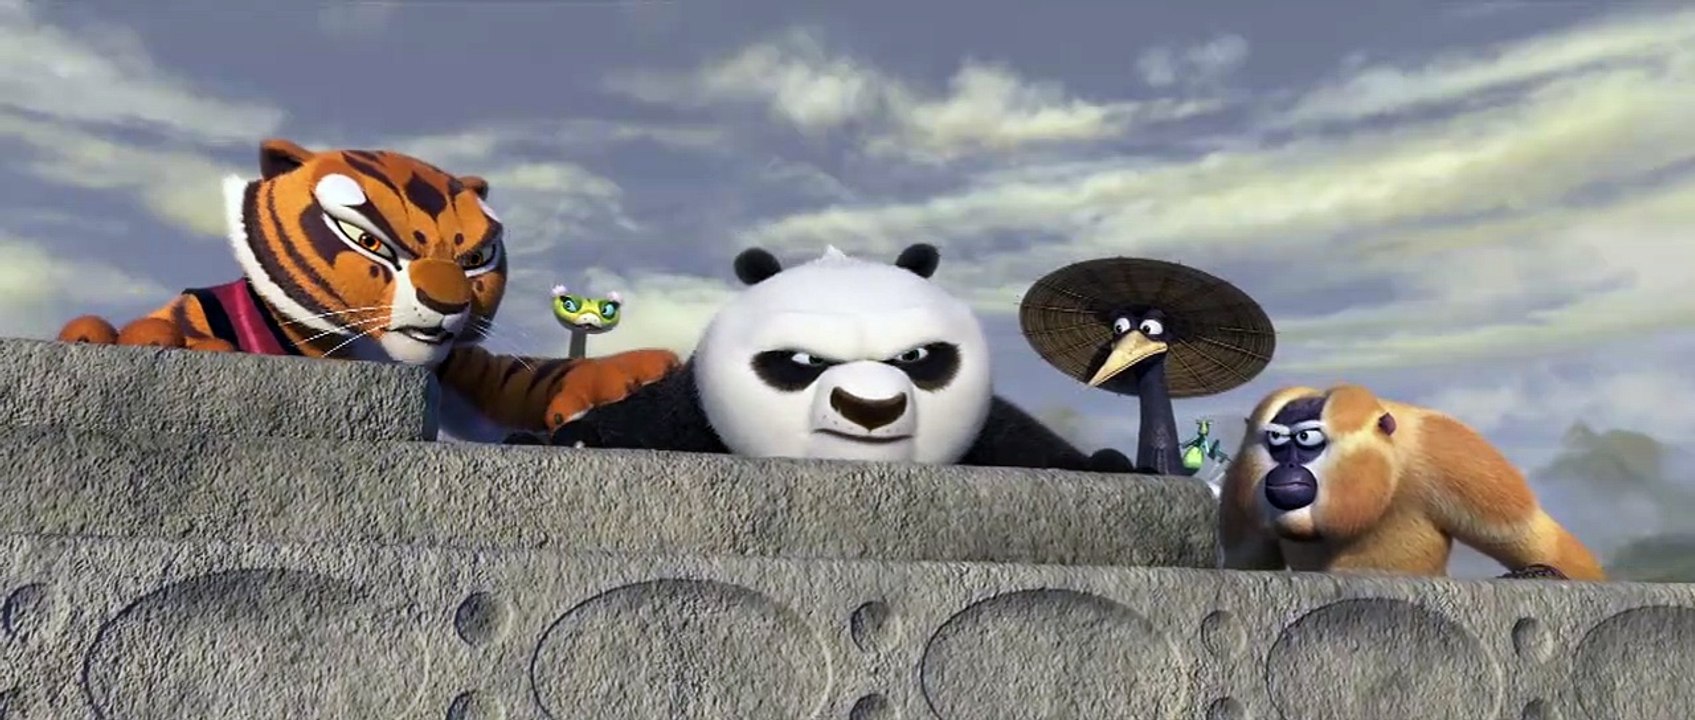 Kung Fu Panda 2 Videoauszug (2) DF